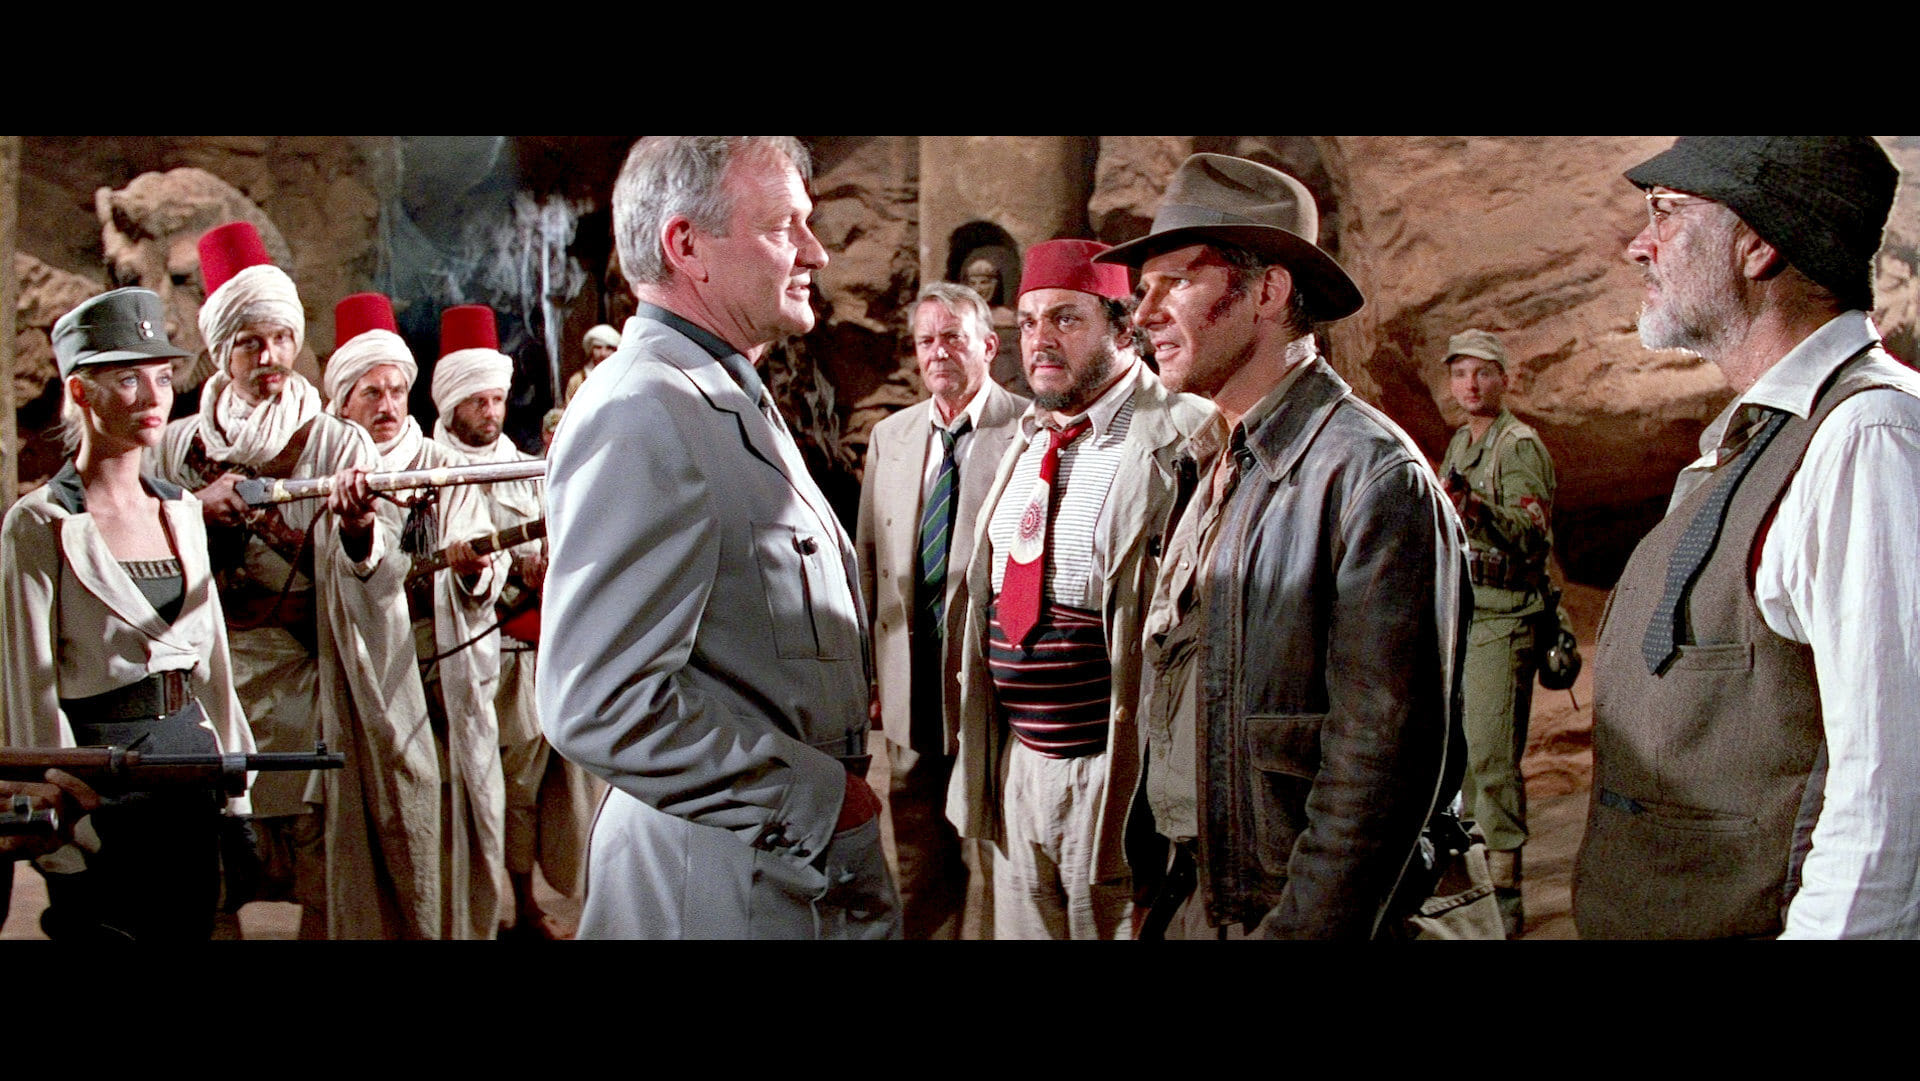 Image du film Indiana Jones et la Dernière Croisade qwsb42lyg1pnp1zdkhfte90h6vojpg